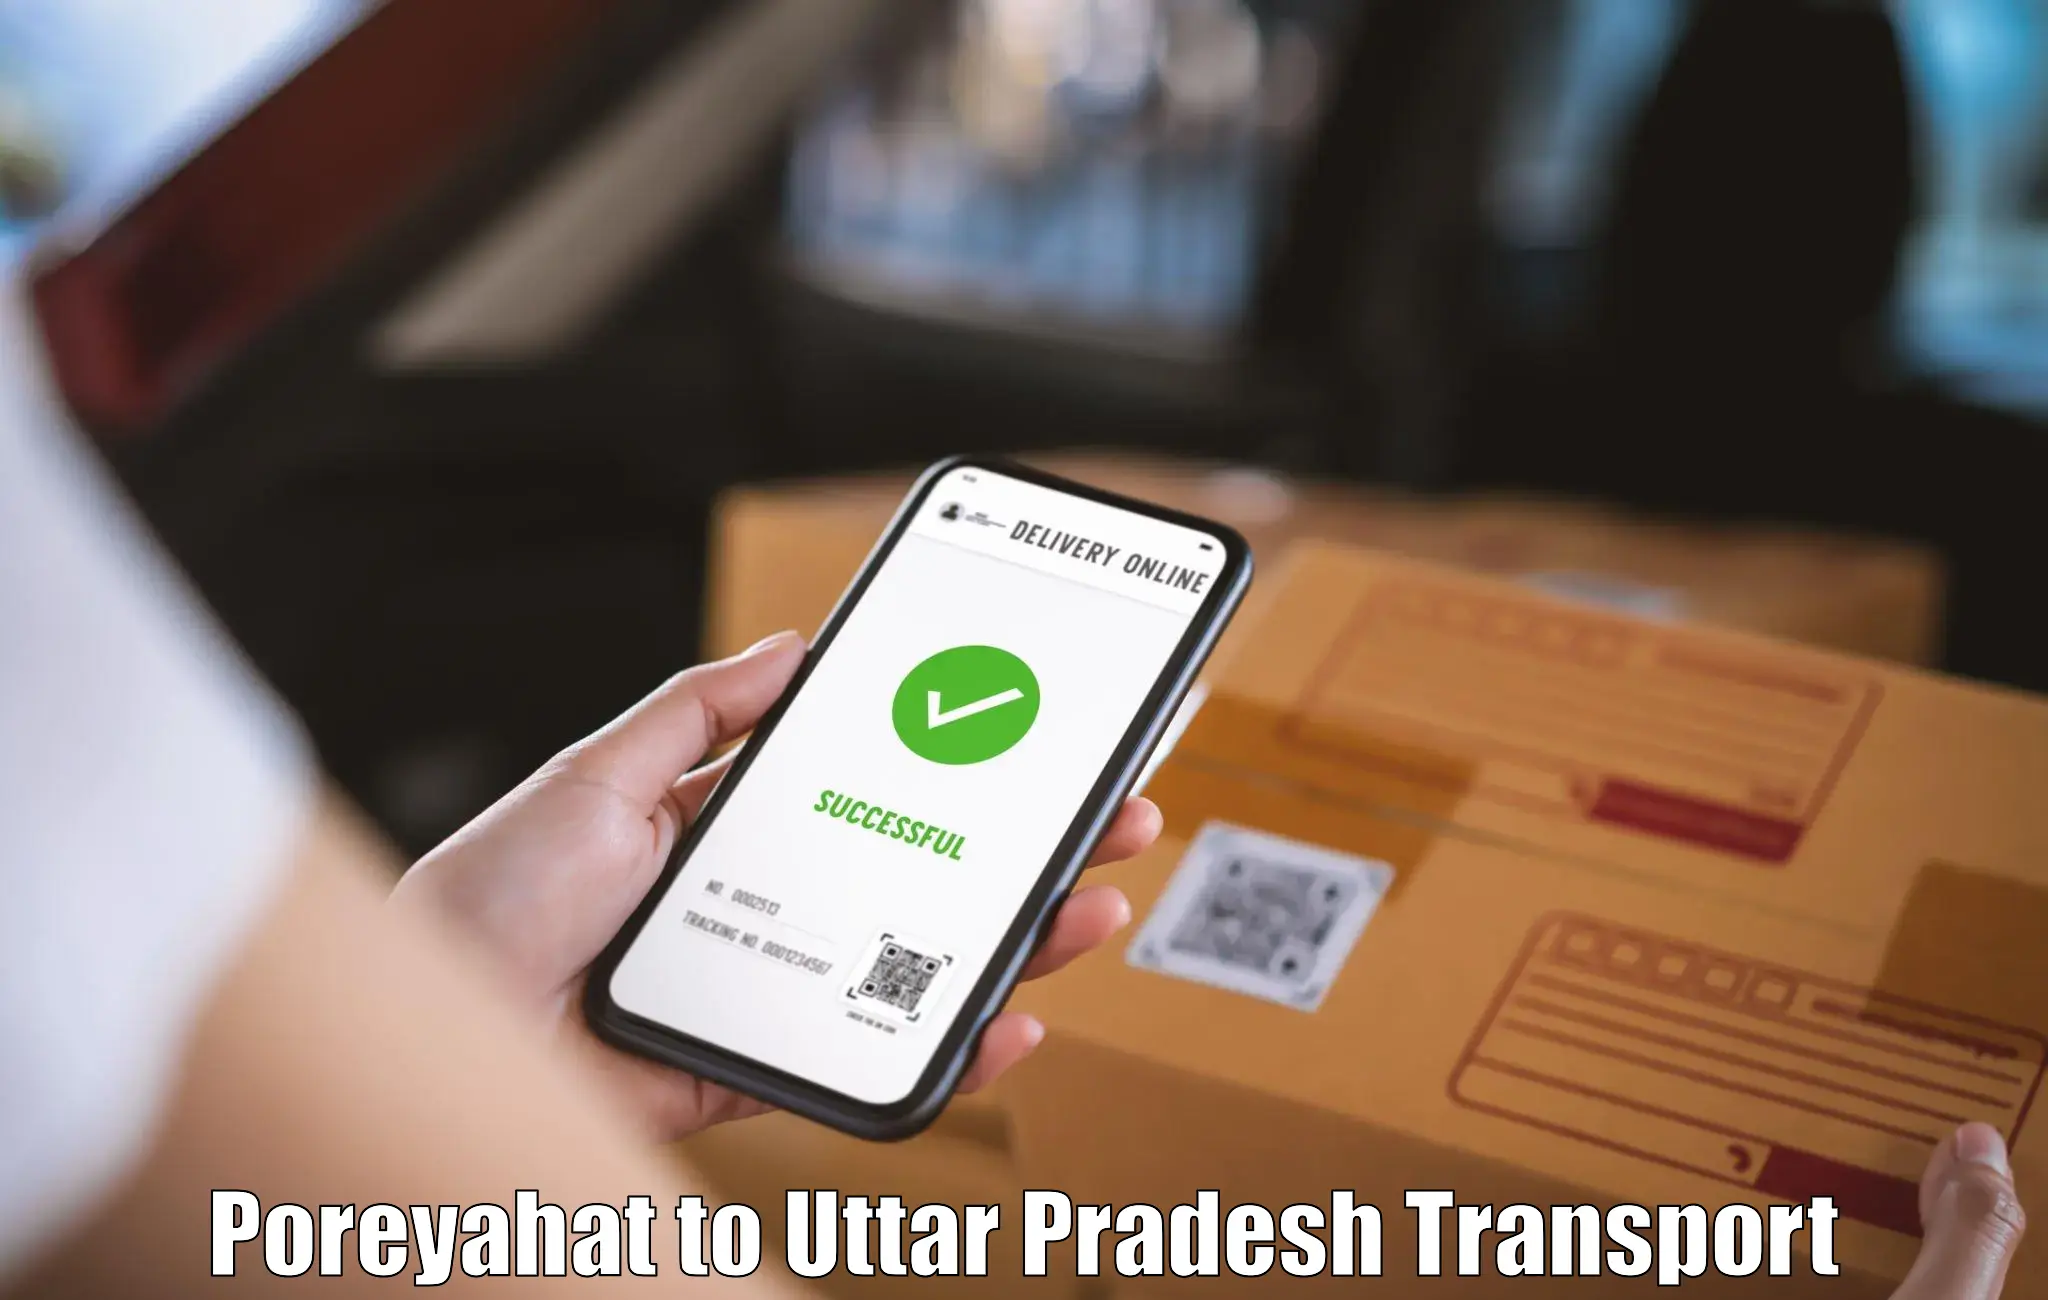 Road transport online services Poreyahat to Malihabad